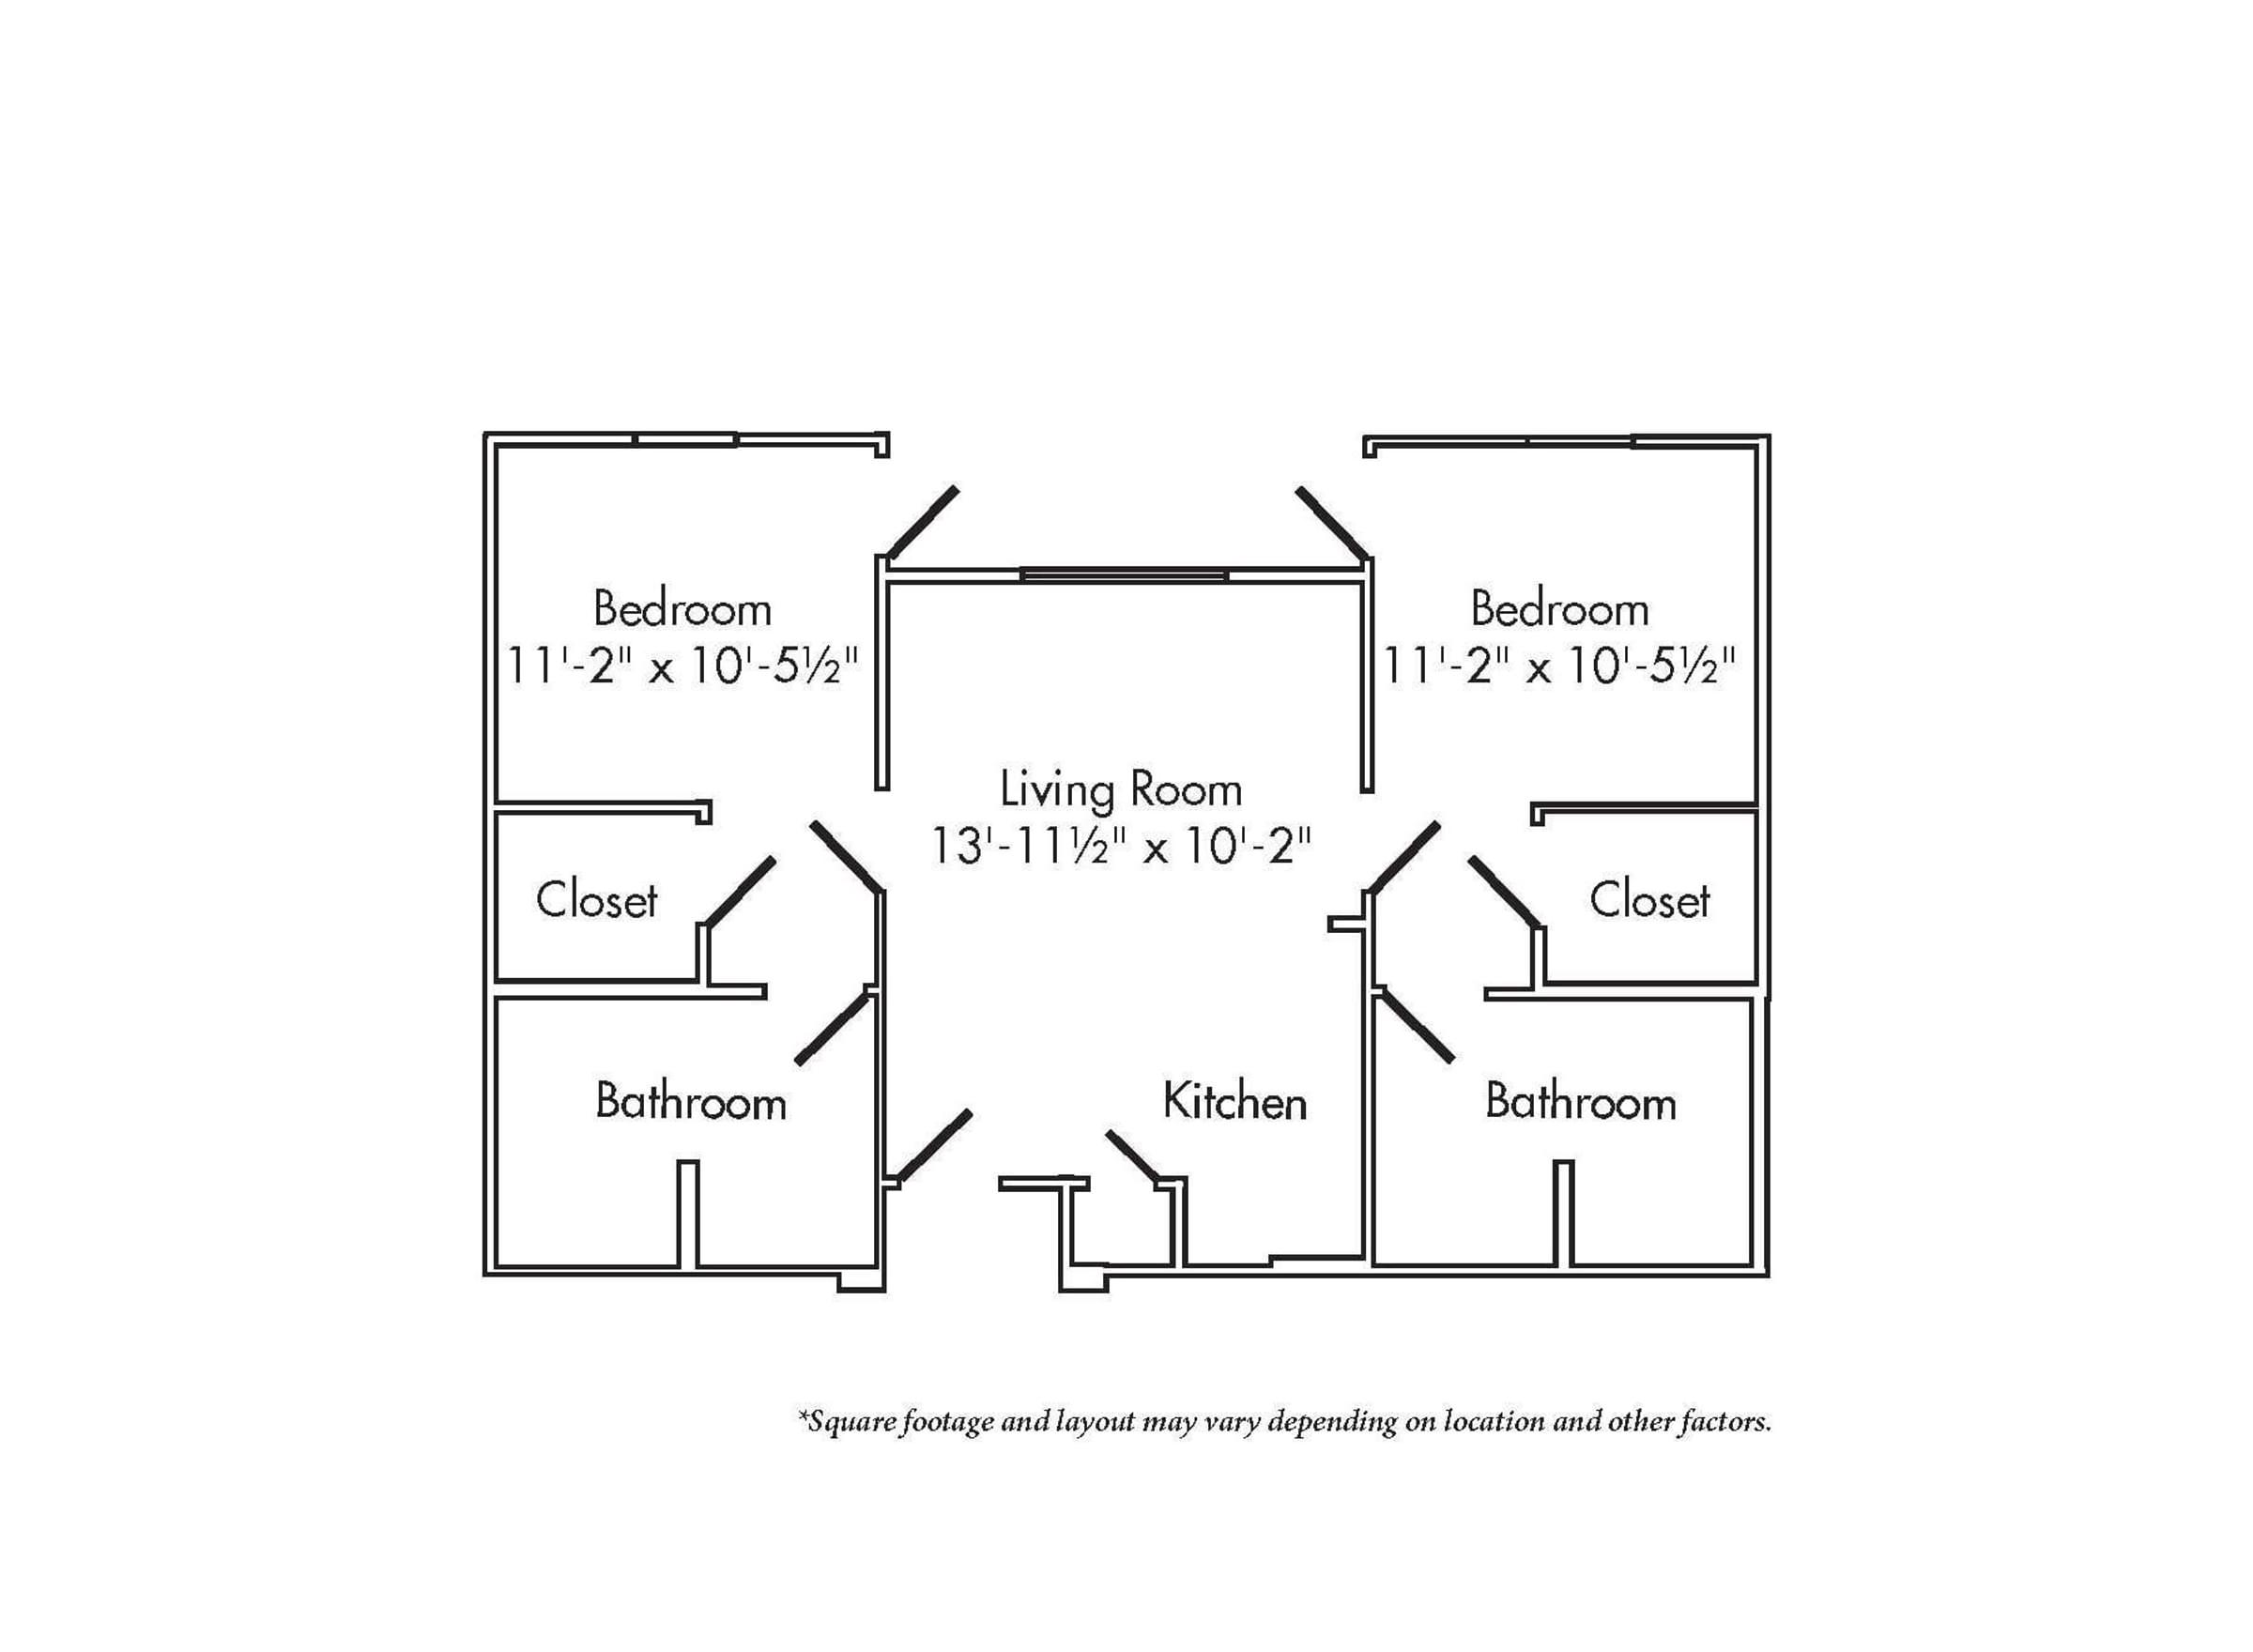 The Claiborne at Thibodaux senior living community two-bedroom floor plan